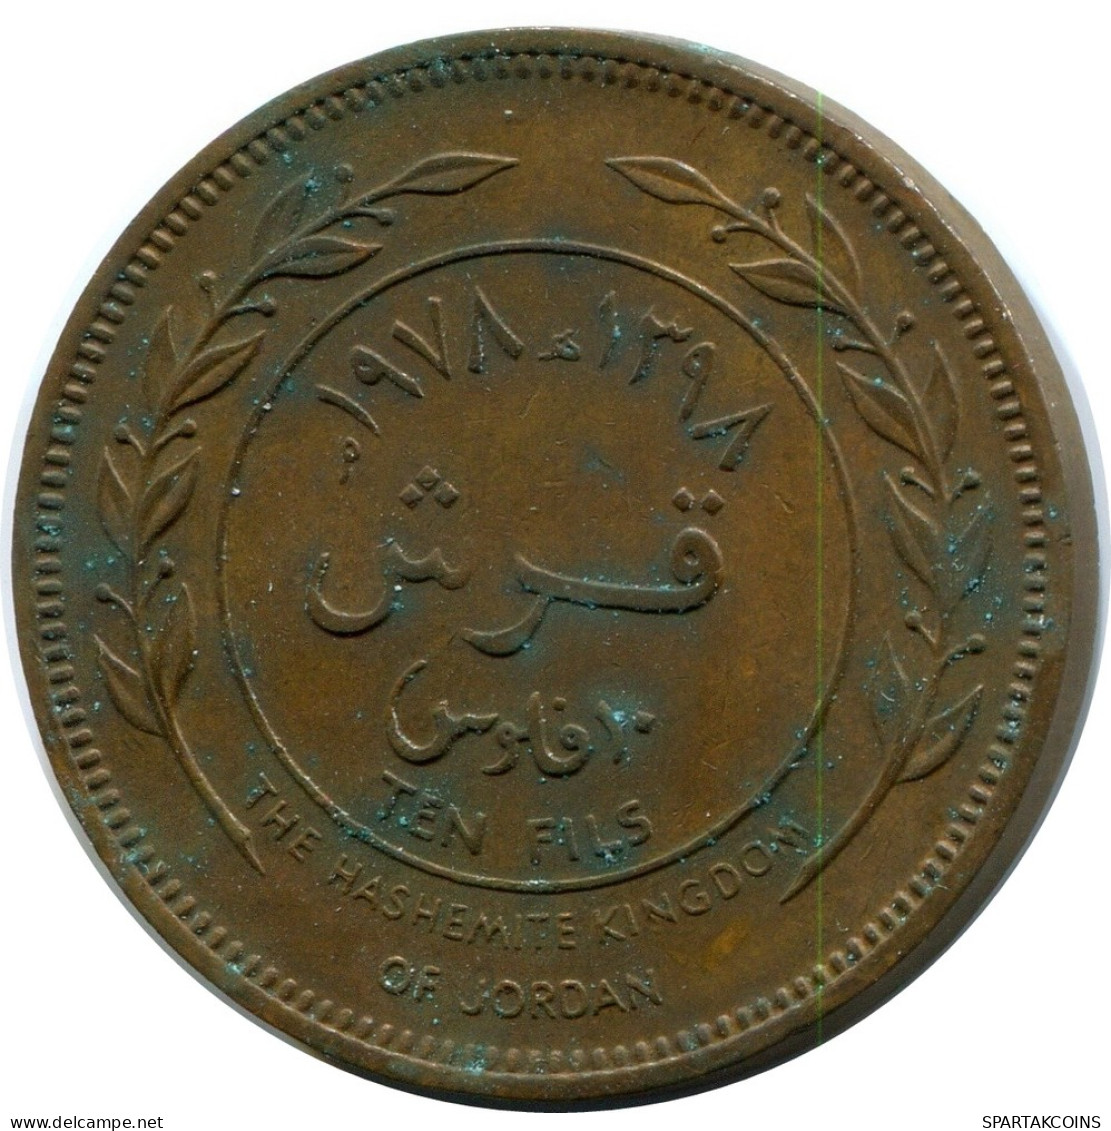 1 QIRSH 10 FILS 1398-1978 JORDAN Islamic Coin #AW795.U - Jordanien